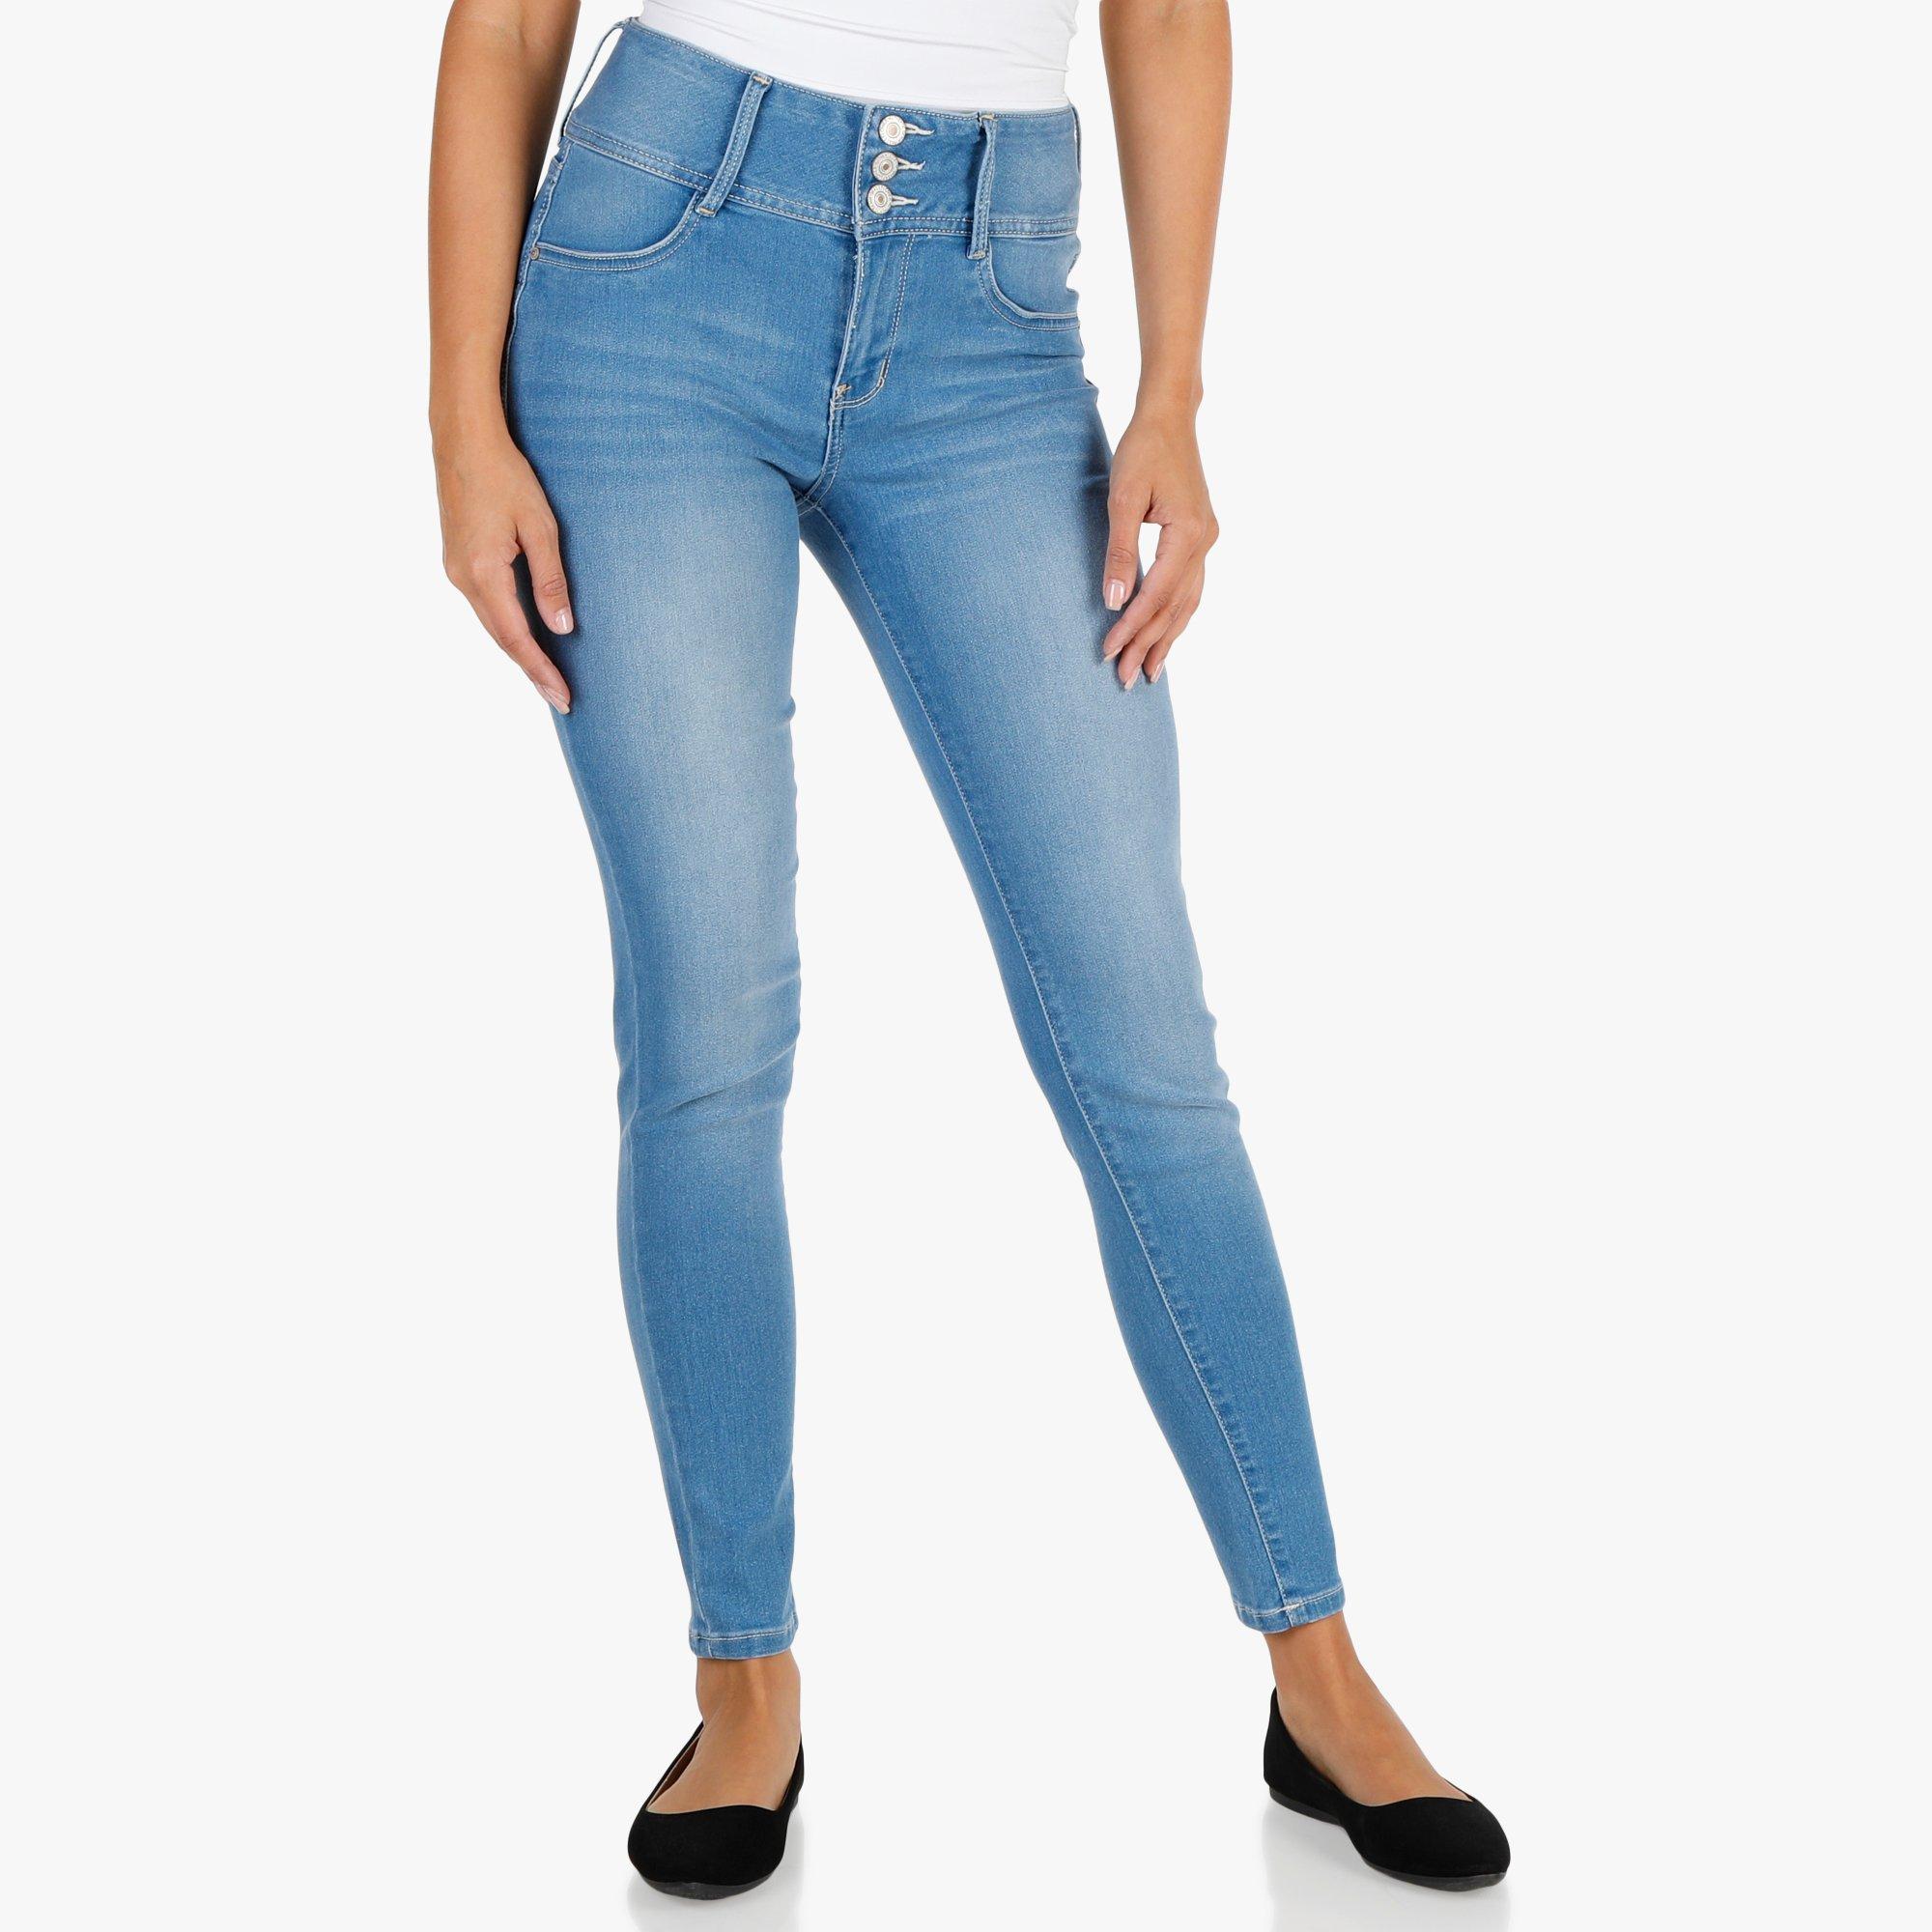 wallflower jeans outlet